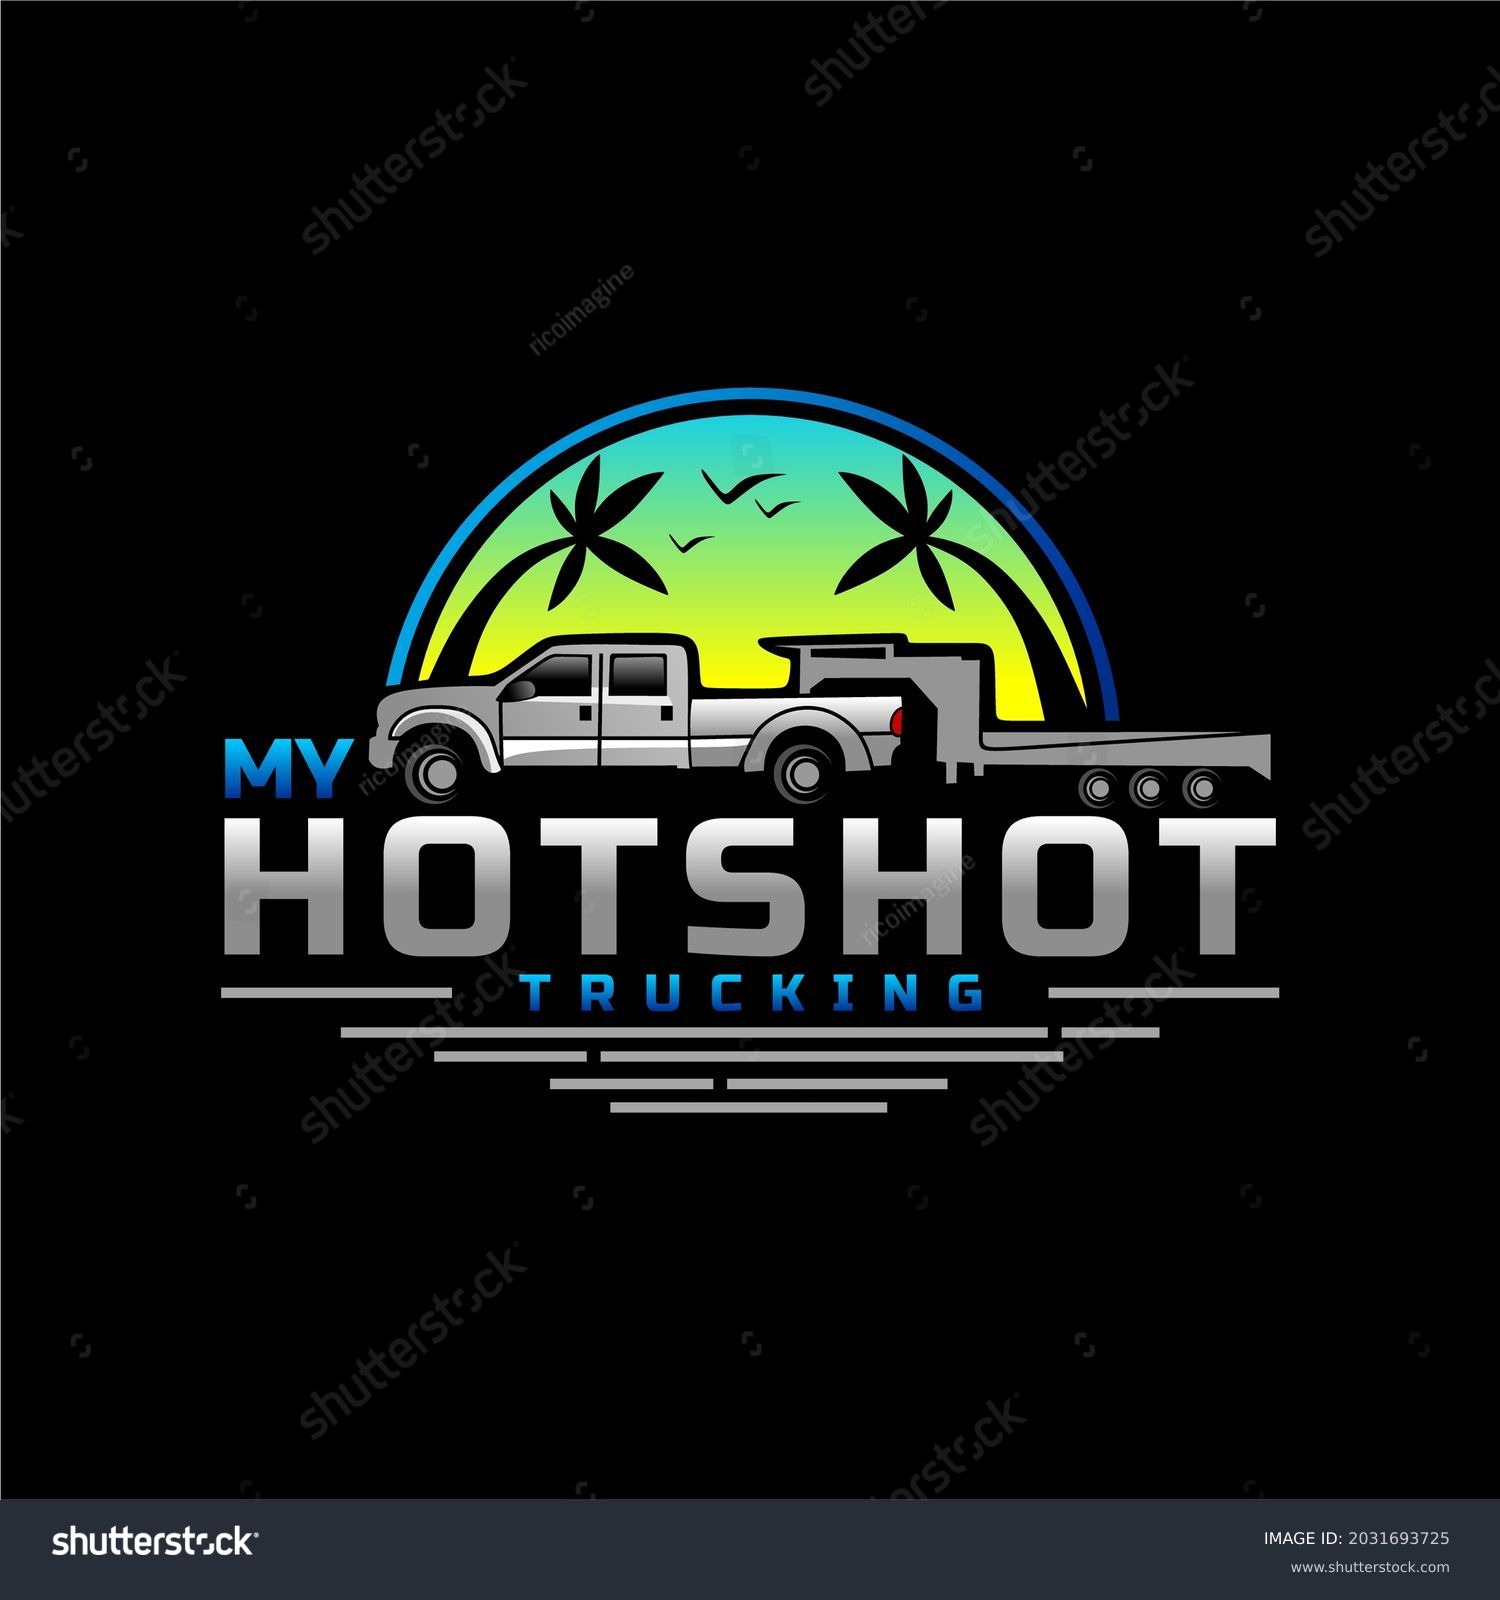 hotshot trucking logo design